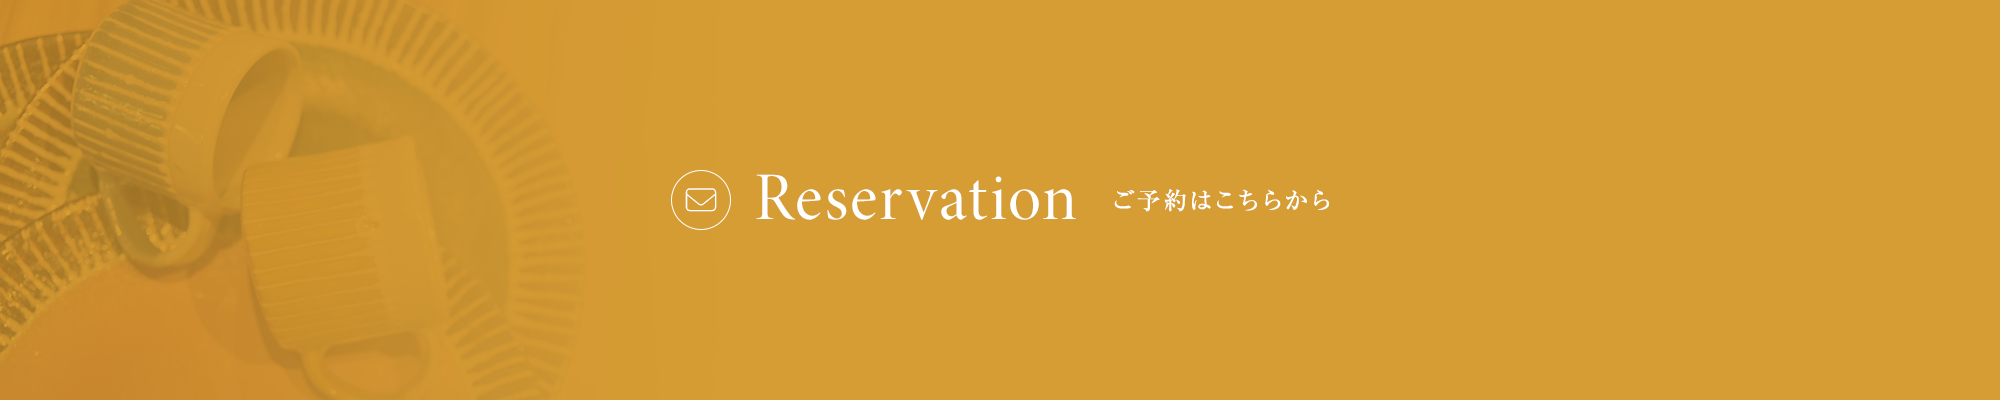 bnr_croche_reservation_off